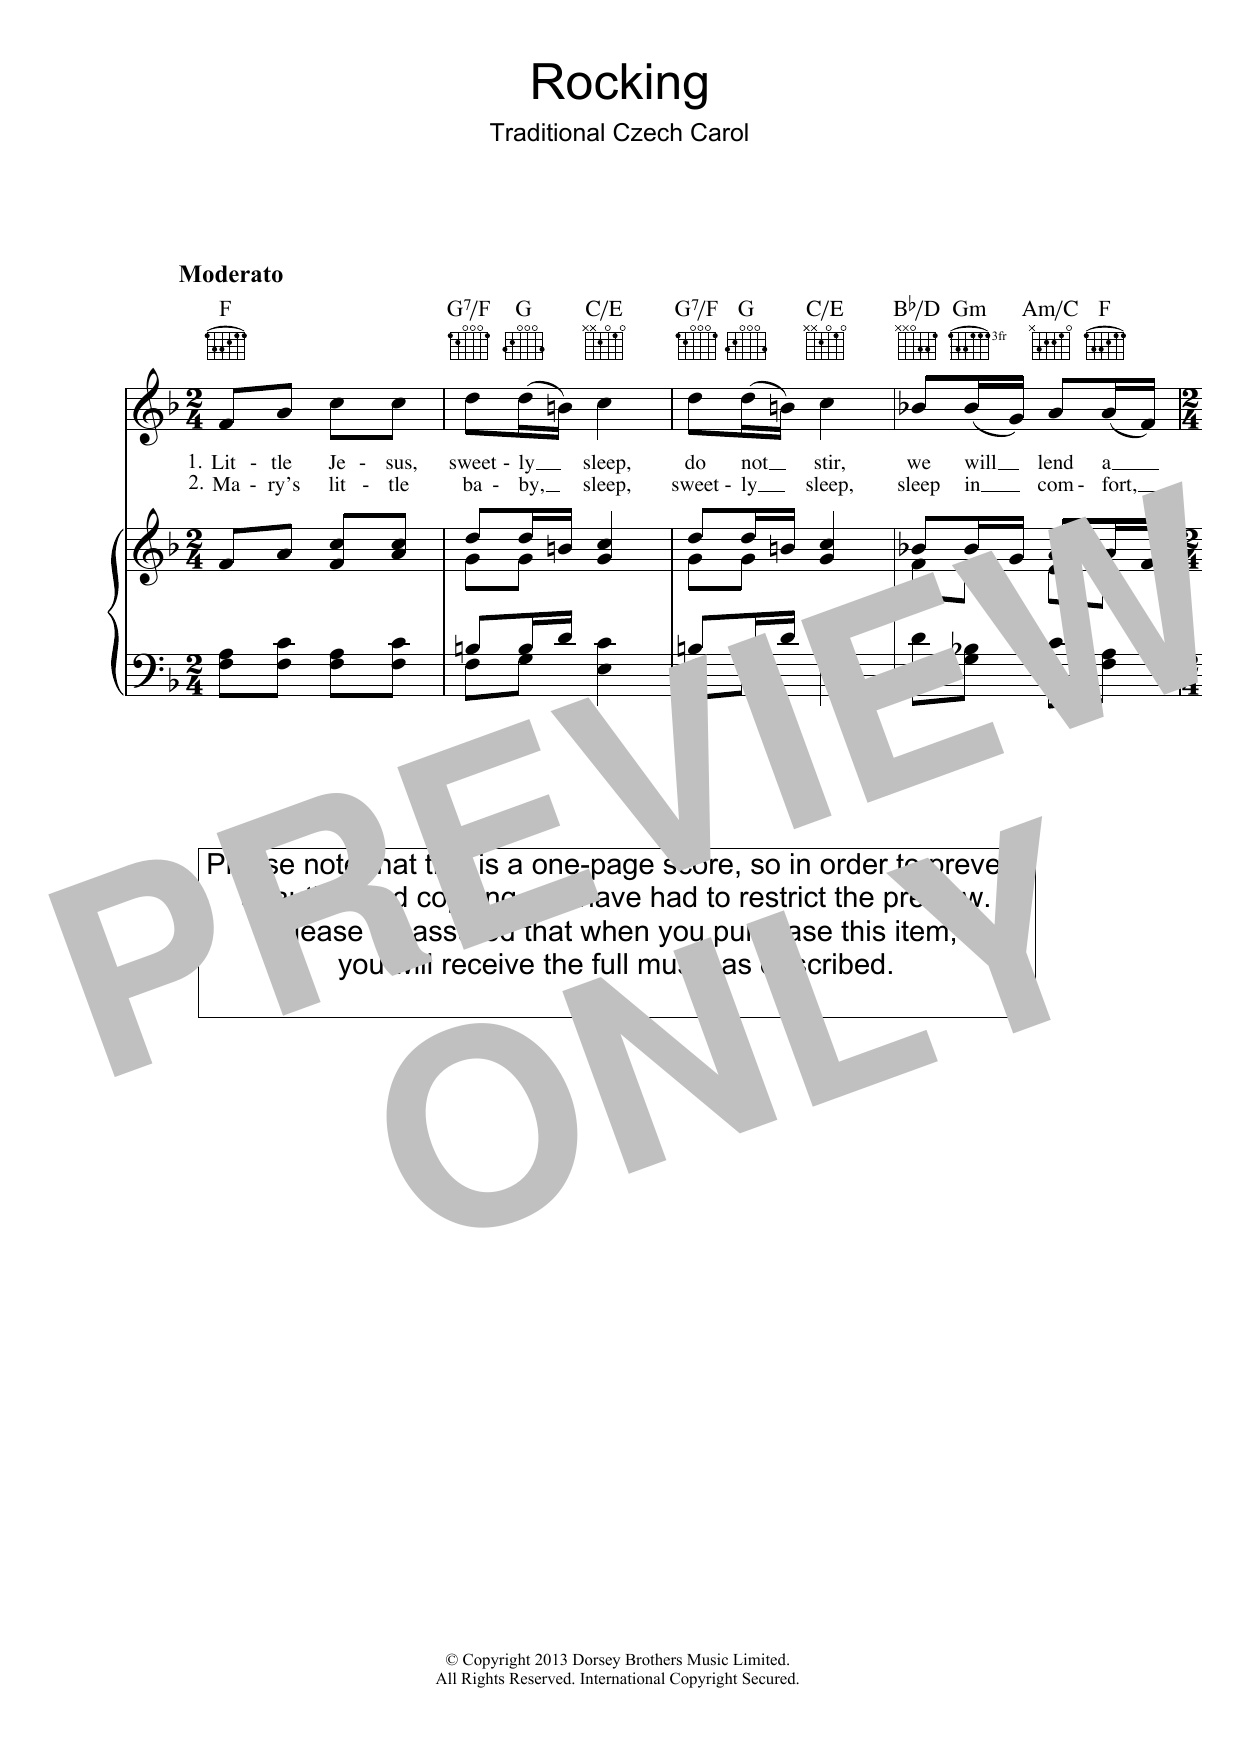 Christmas Carol Little Jesus (Rocking Carol) Sheet Music Notes & Chords for Beginner Piano - Download or Print PDF